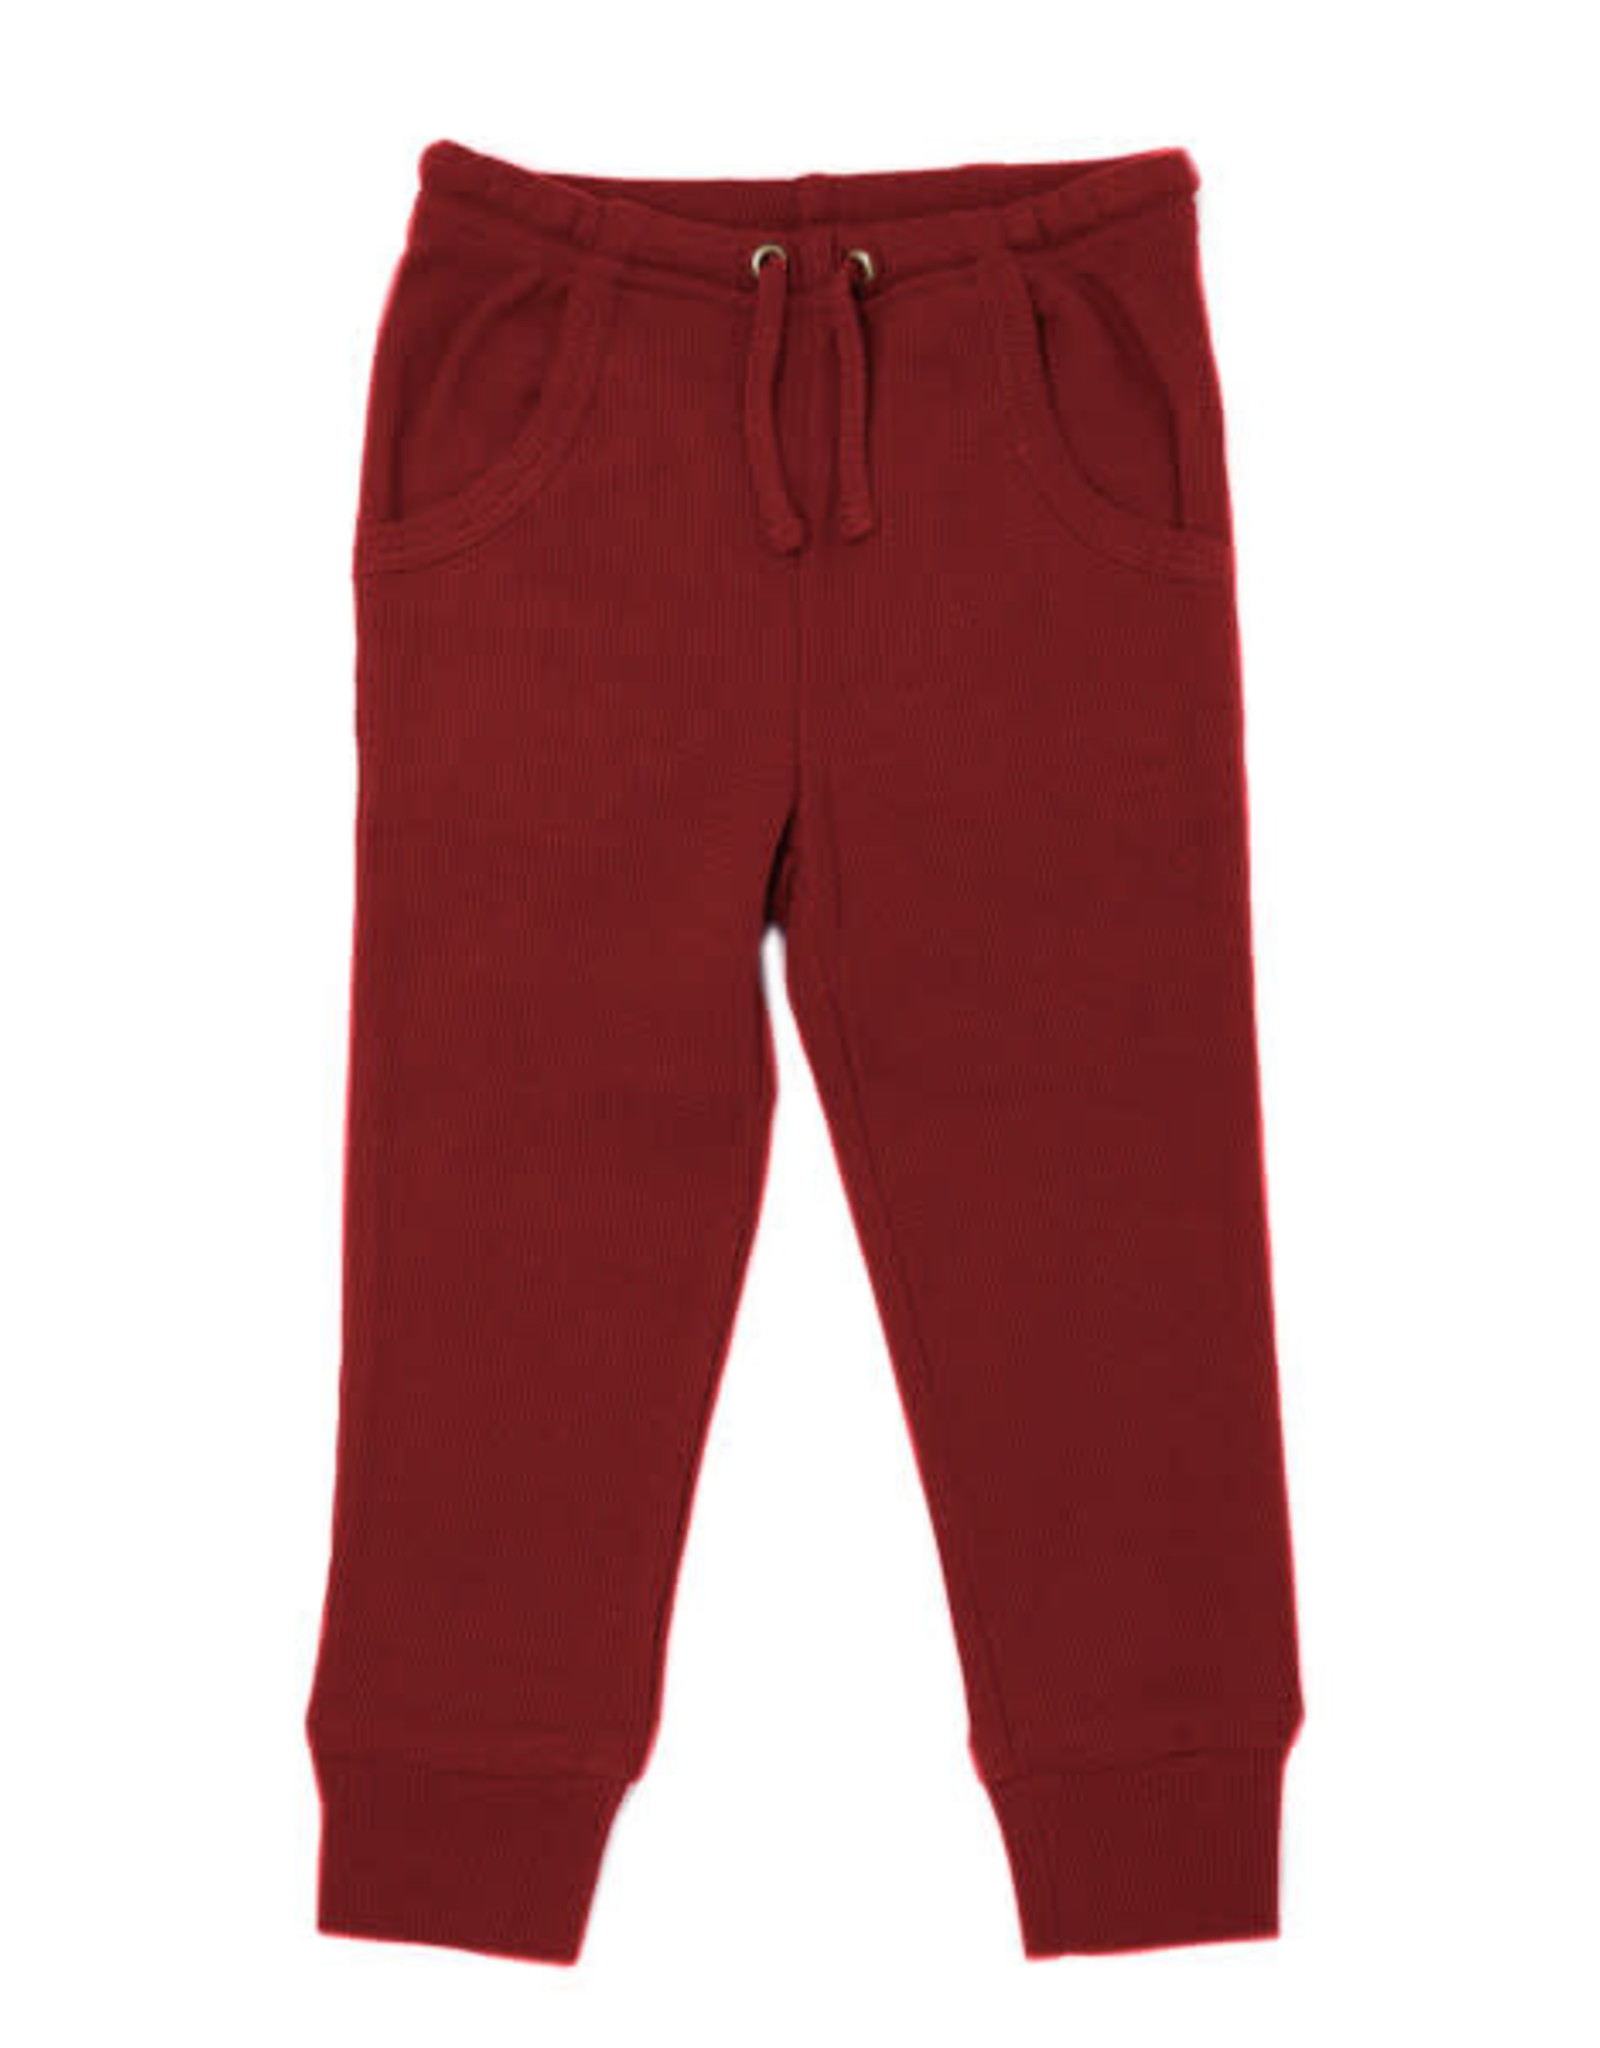 L'oved Baby Kids Long Sleeve Thermal Pajama Set Crimson